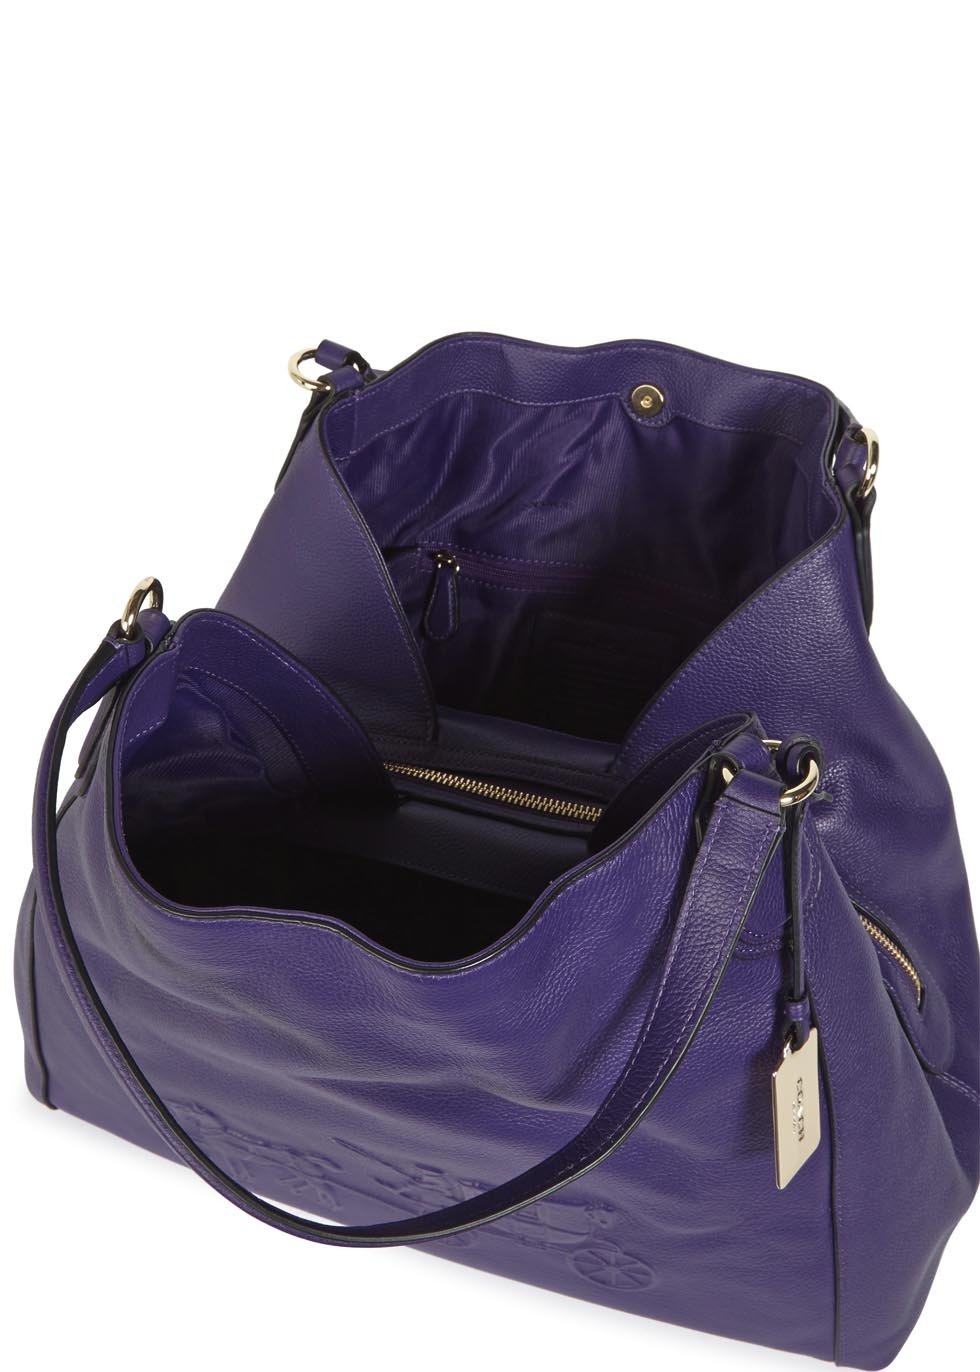 Coach Large Edie Violet Leather Shoulder Bag in Purple | Lyst